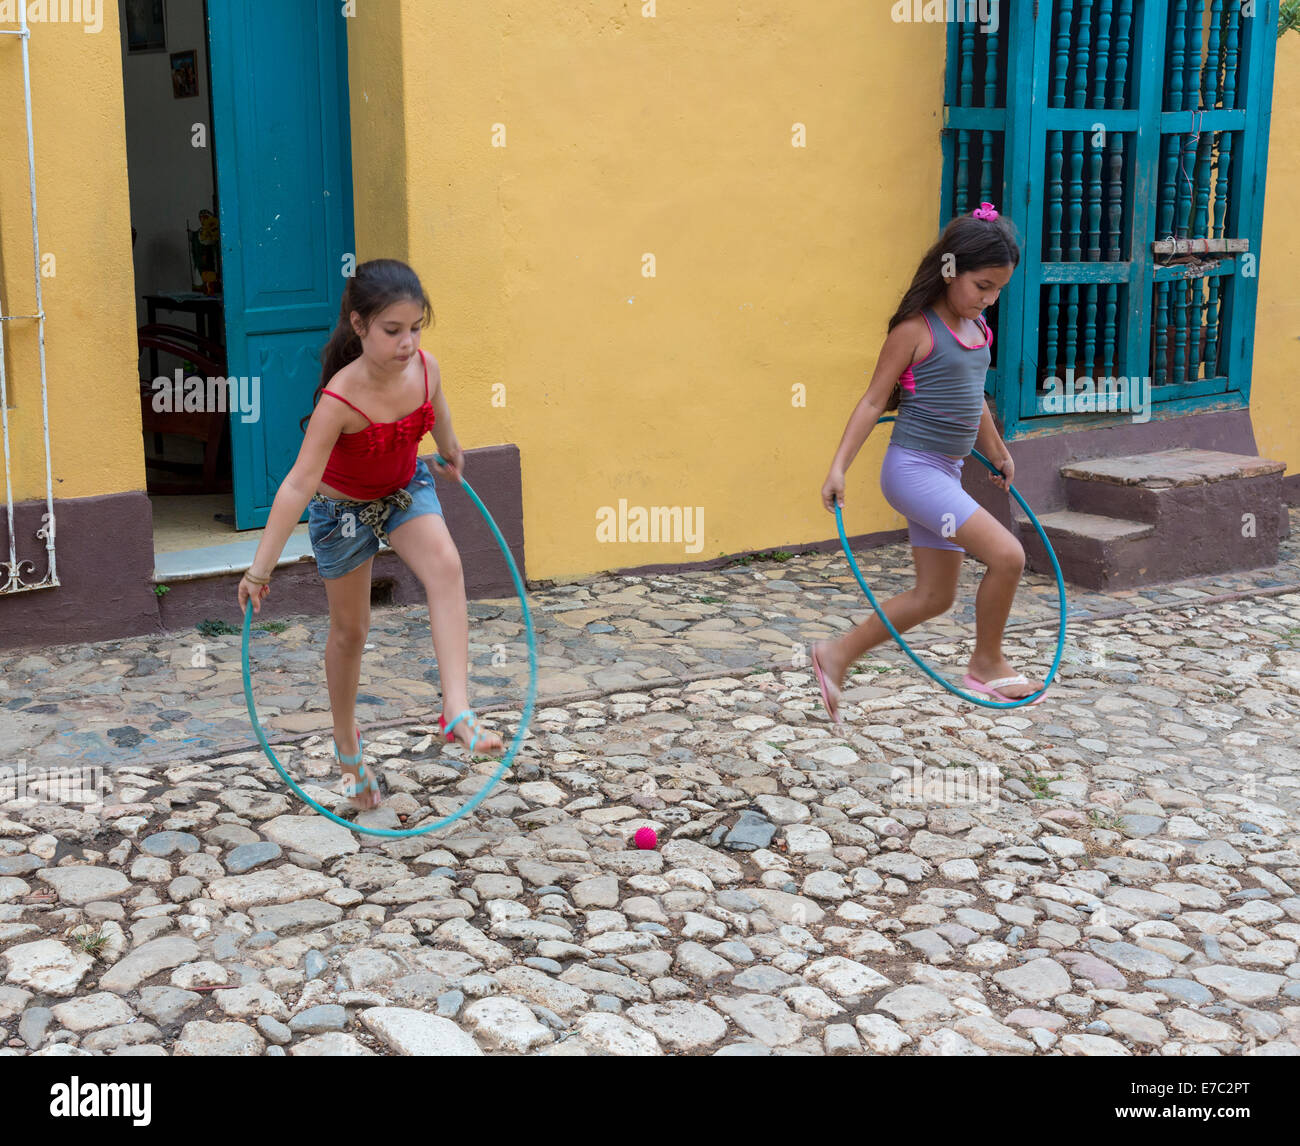 young girls playing with hula hoop, Trinidad, Cuba Stock Photo